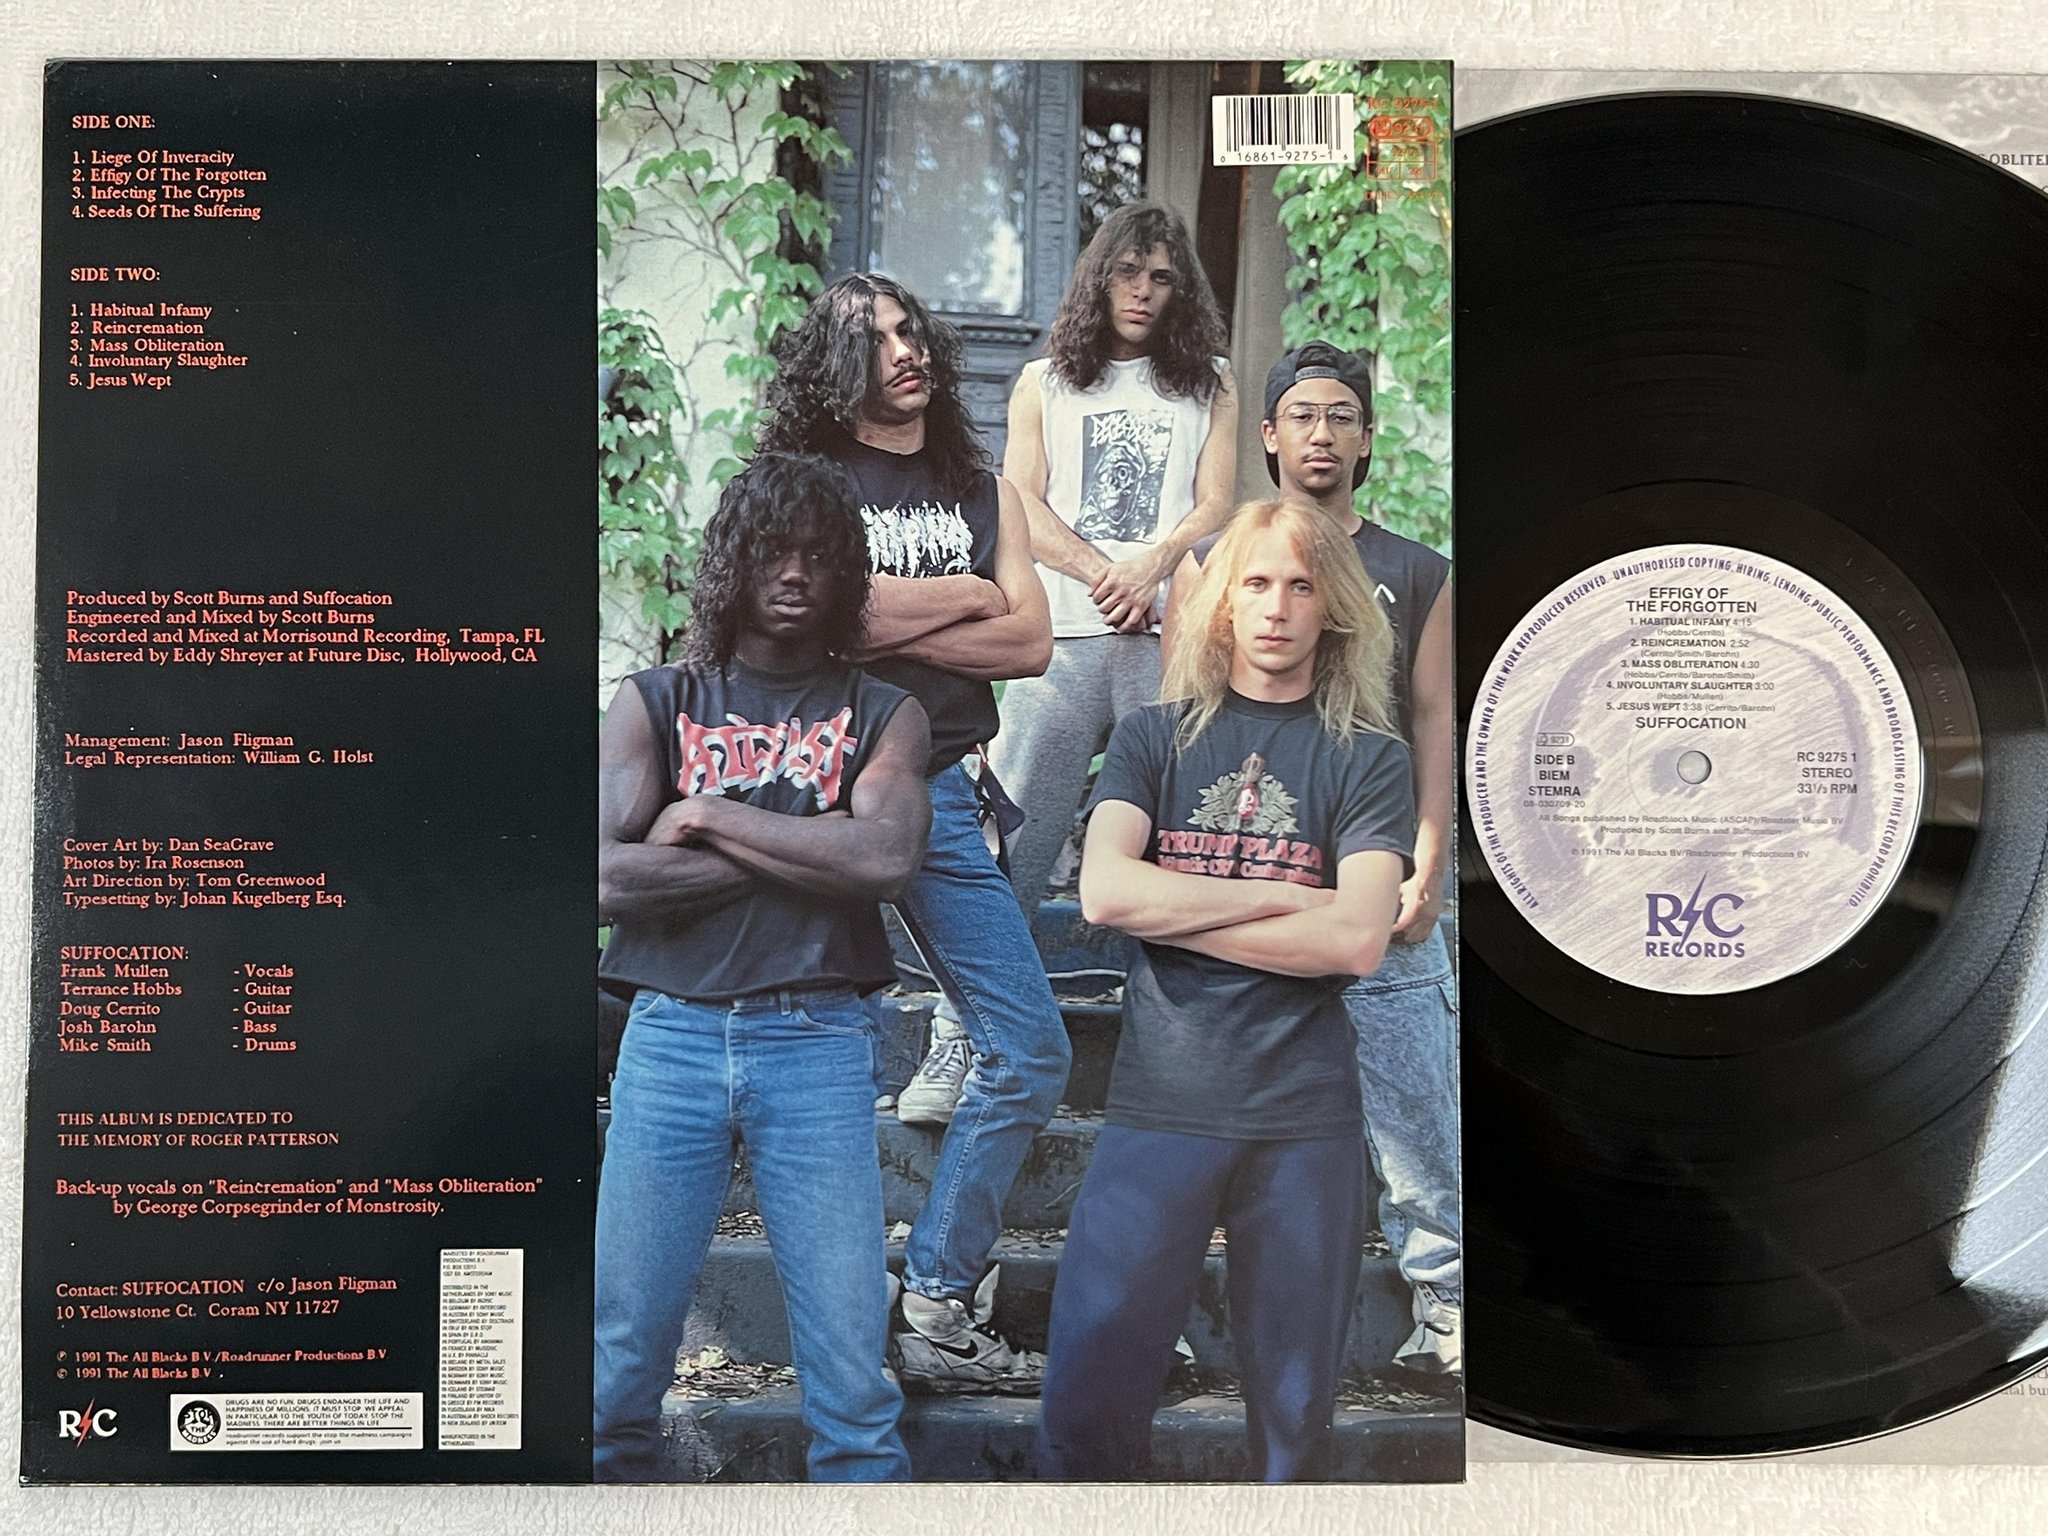 Omslagsbild för skivan SUFFOCATION Effigy Of The Forgotten LP -91 r/c rc 9275-1 ** death metal **